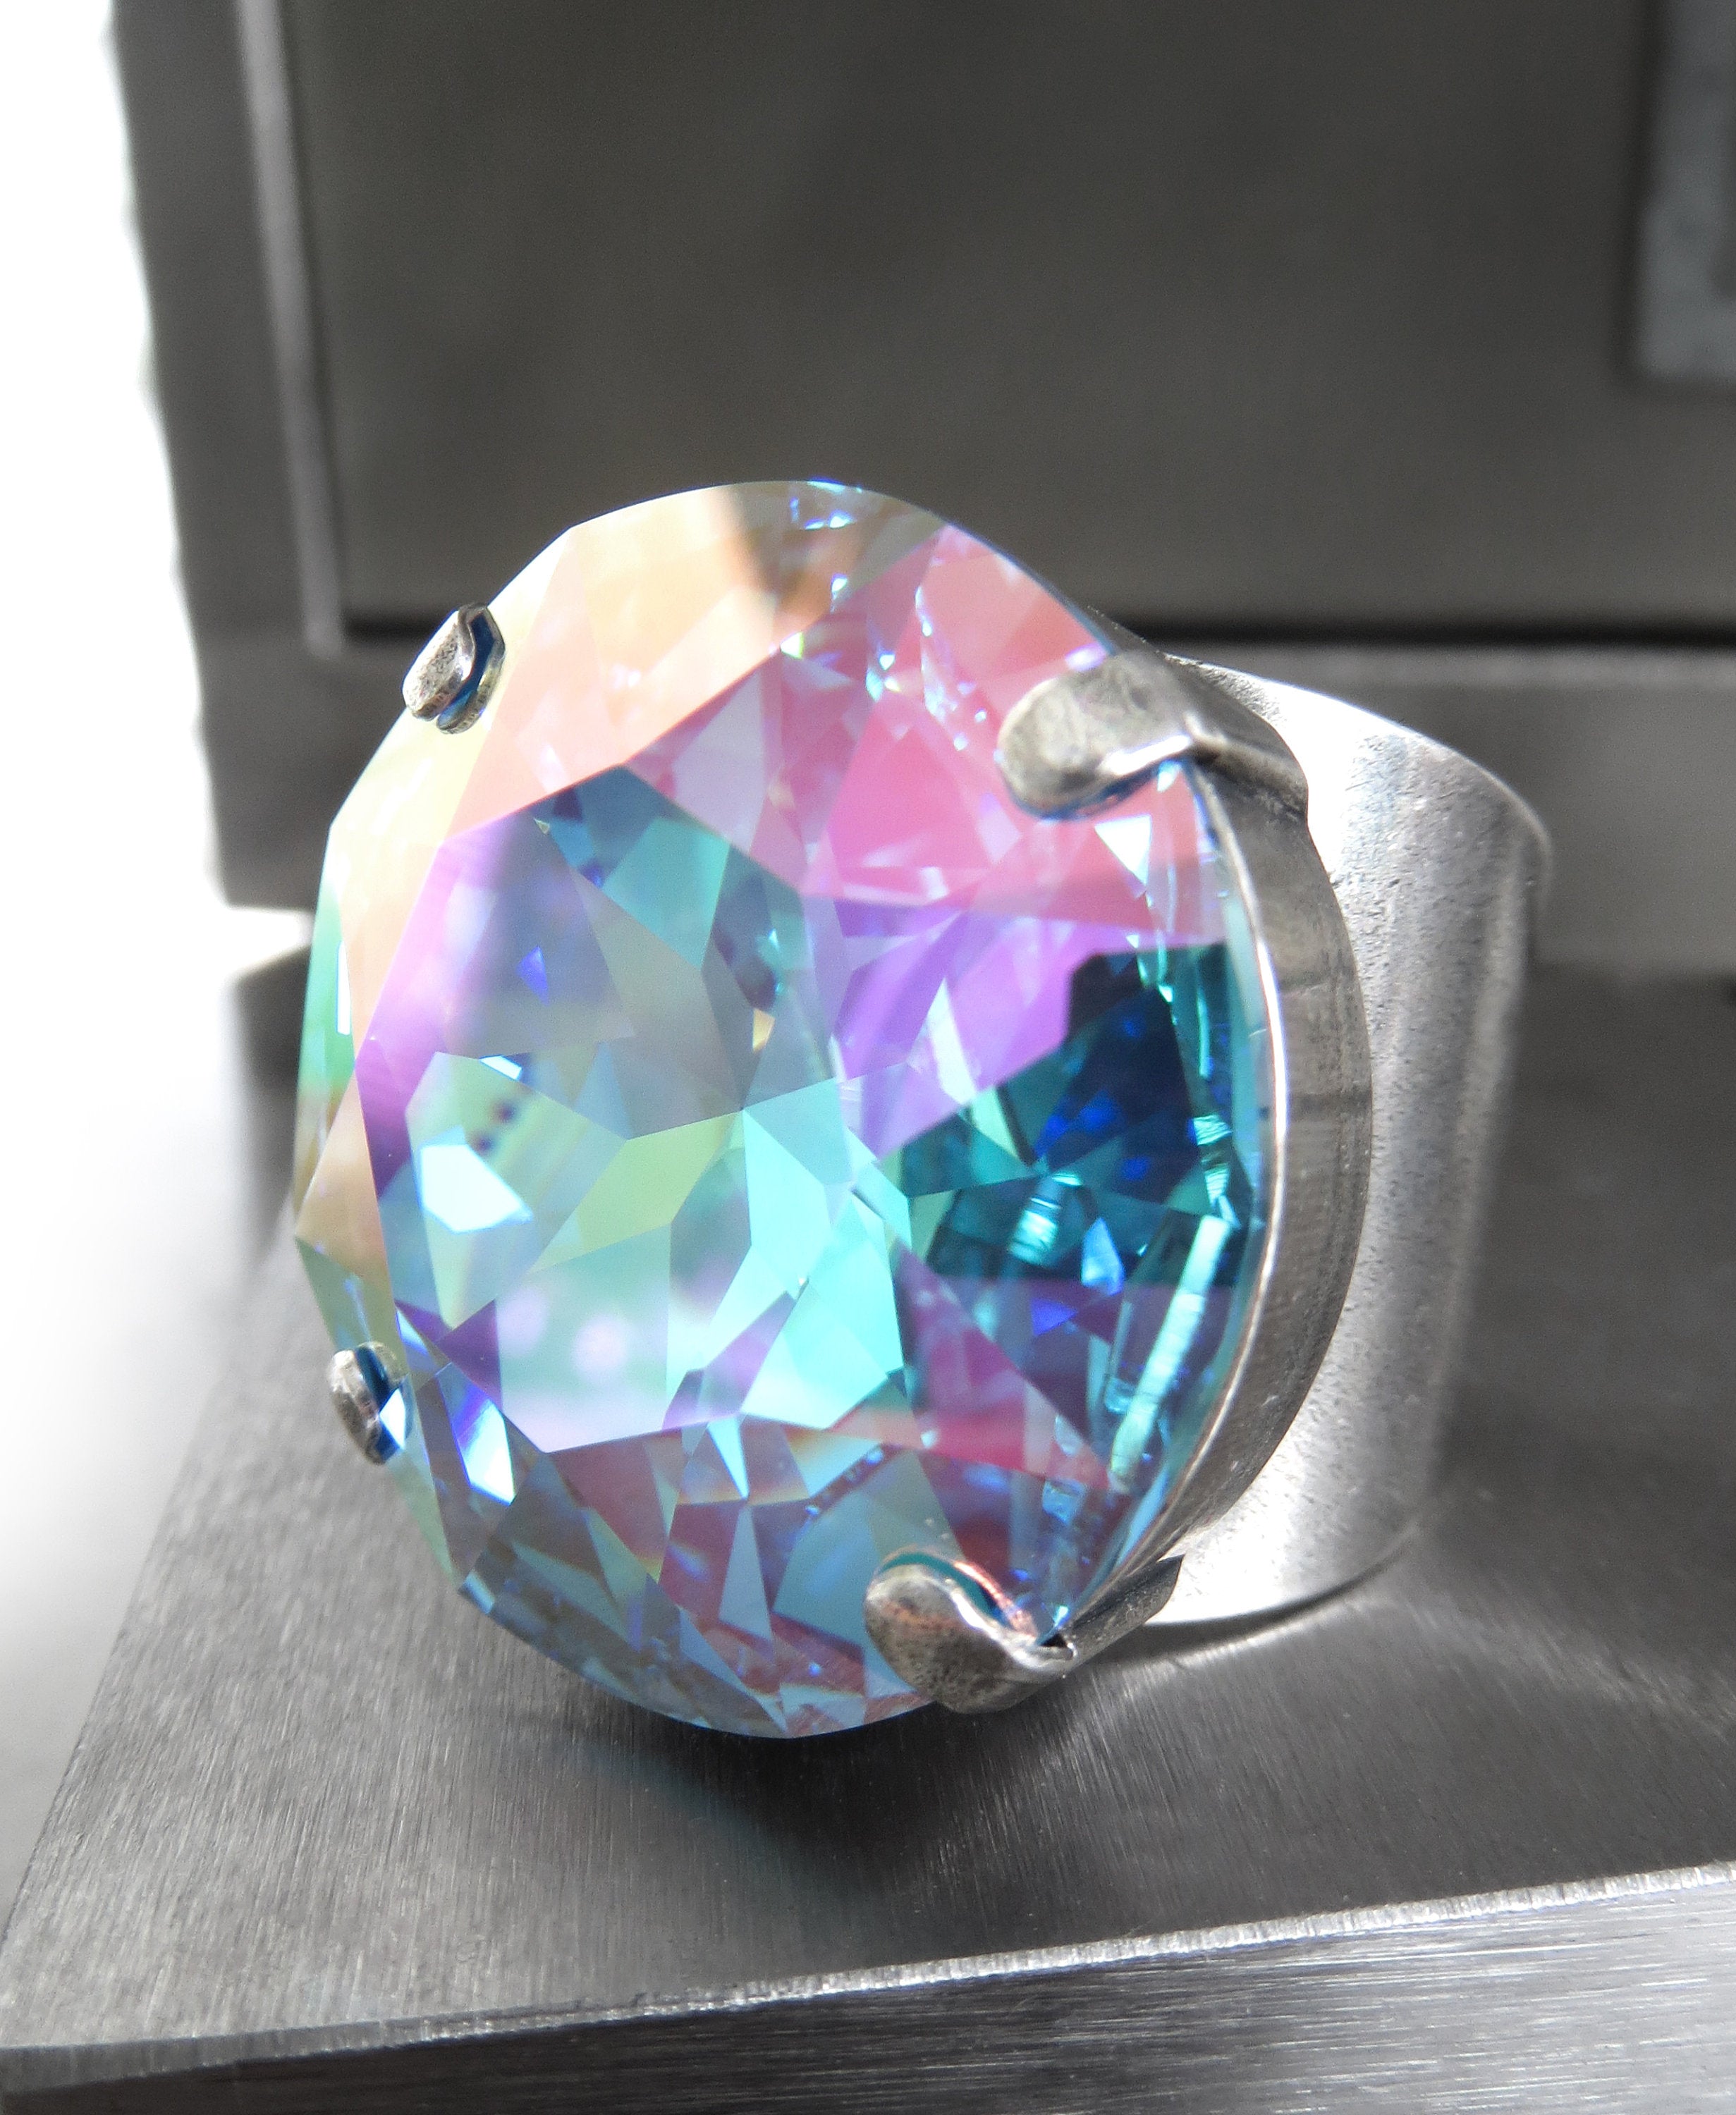 ENCORE: Huge Round Aqua Swarovski Crystal Cocktail Ring, Shimmer Sparkle Iridescent Pastel Large Crystal Adjustable Ring, Drag Queen Jewelry